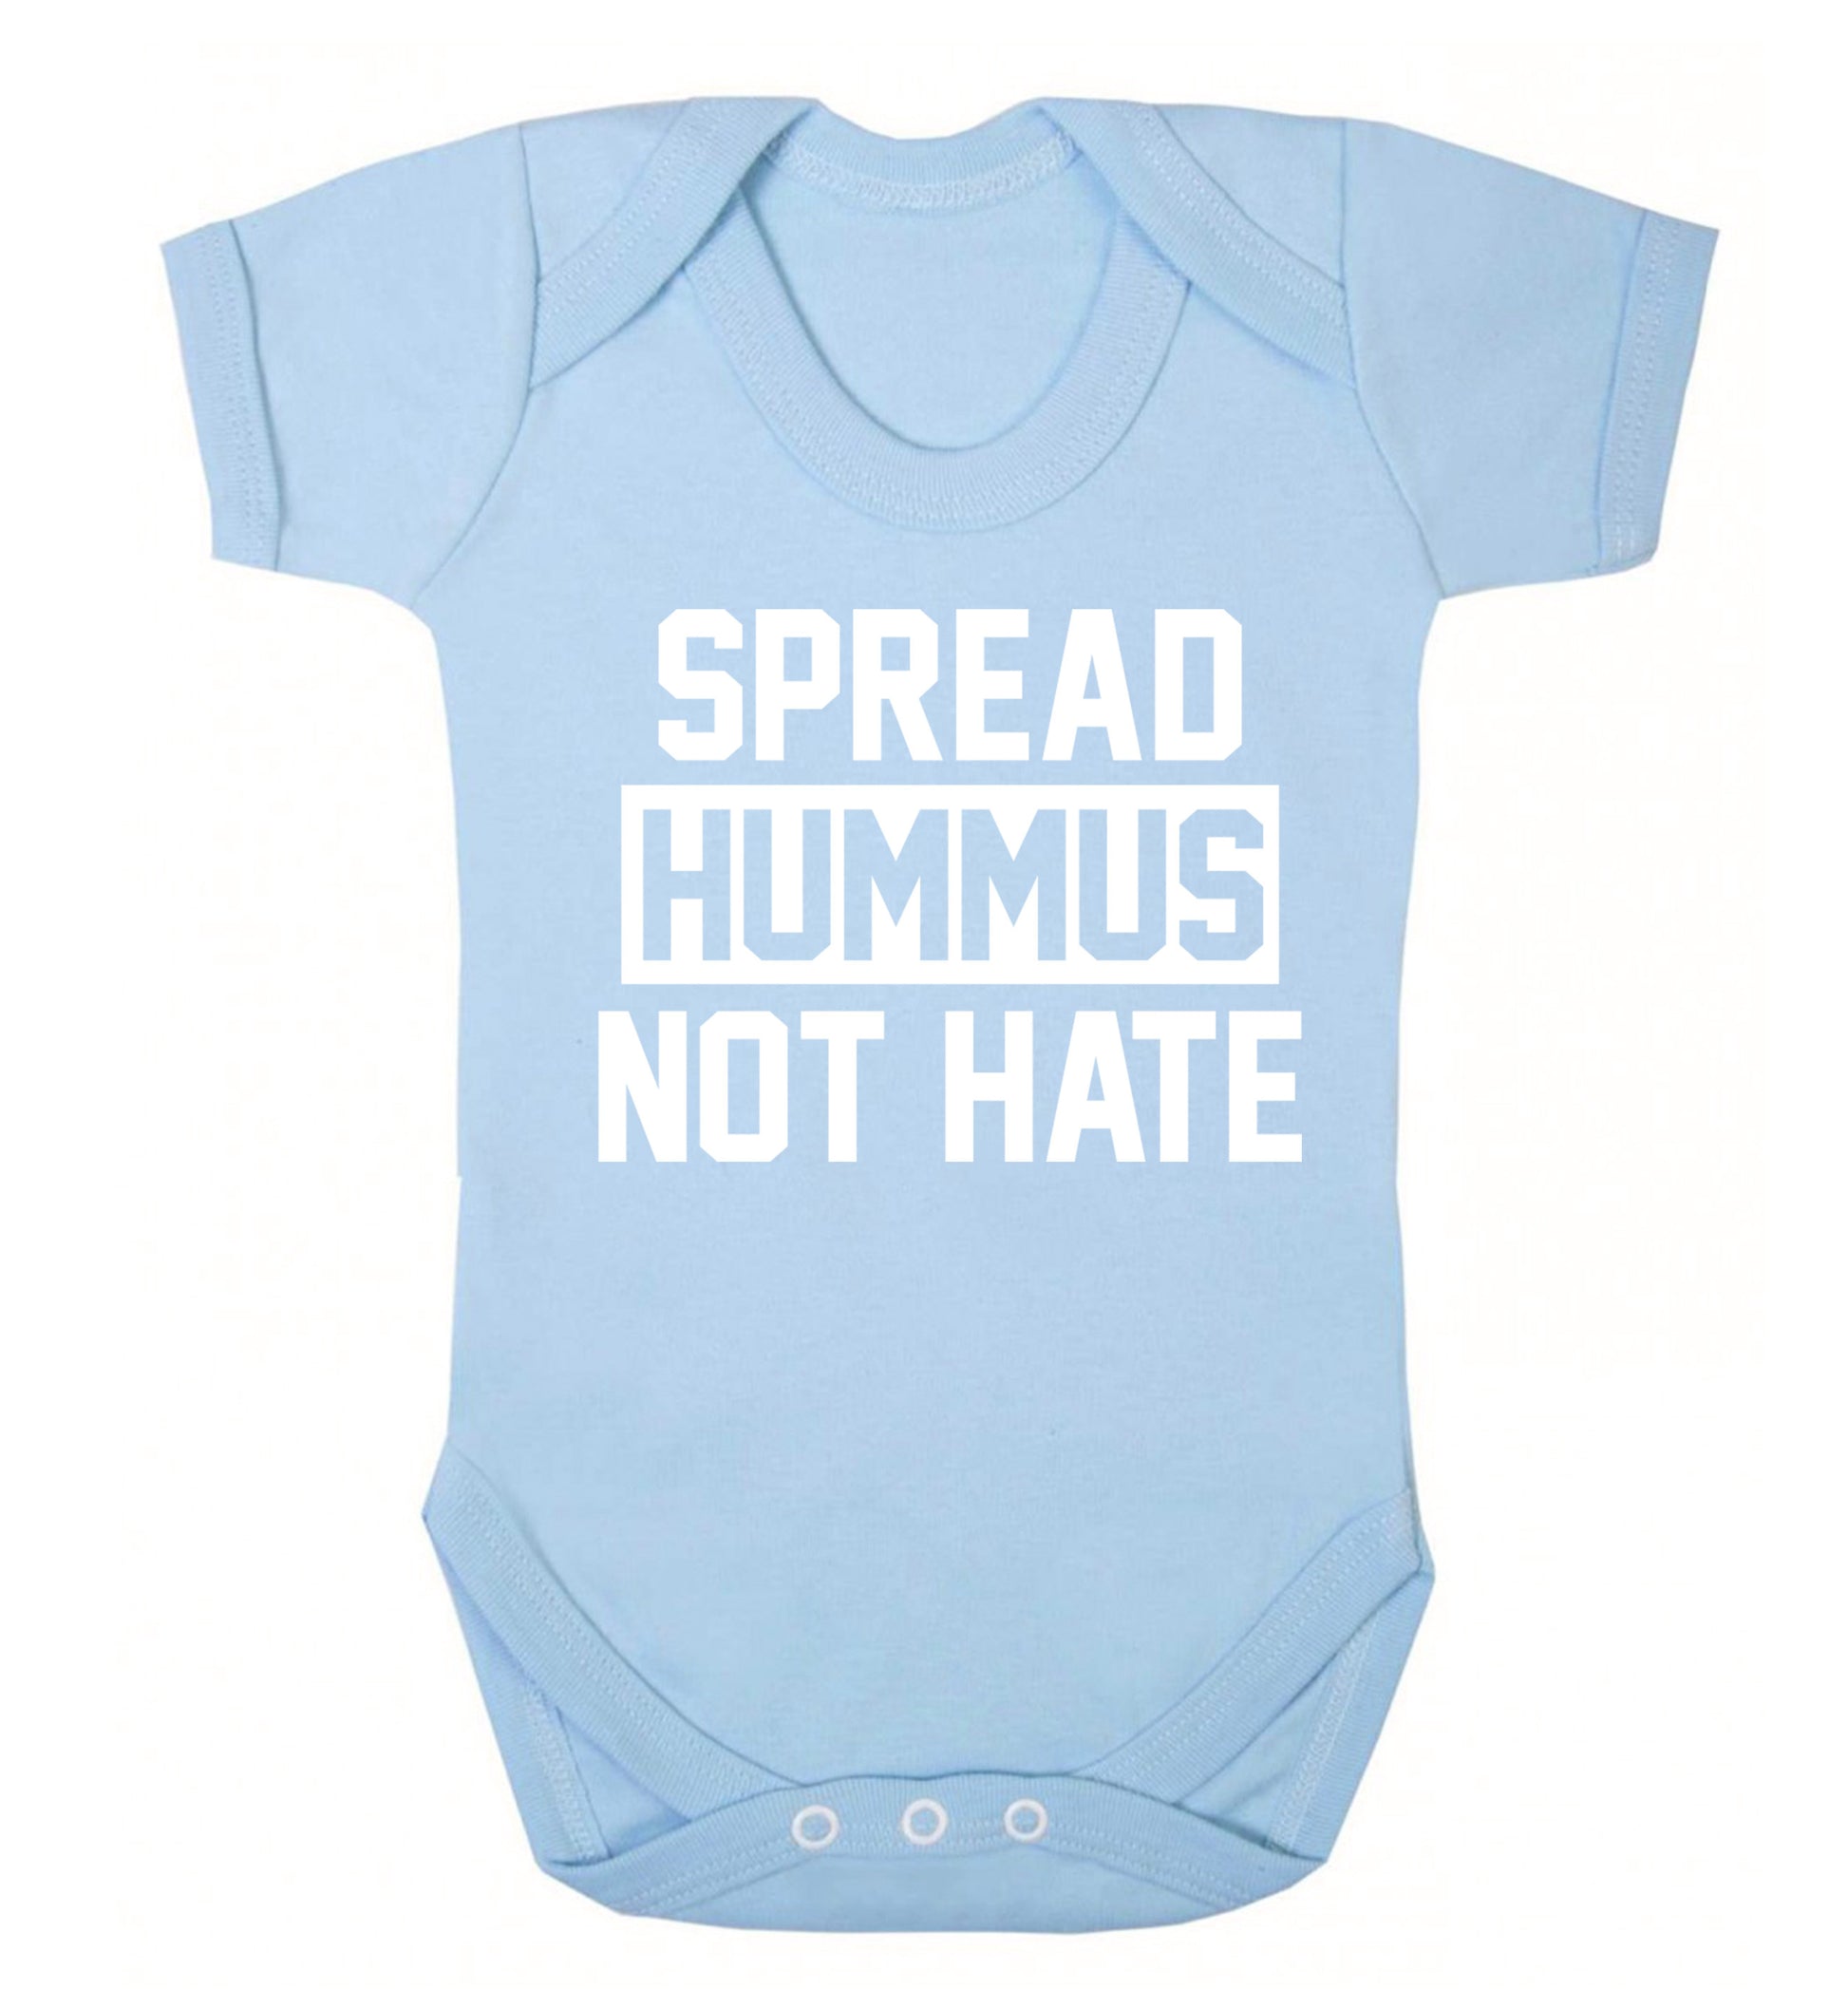 Spread hummus not hate Baby Vest pale blue 18-24 months